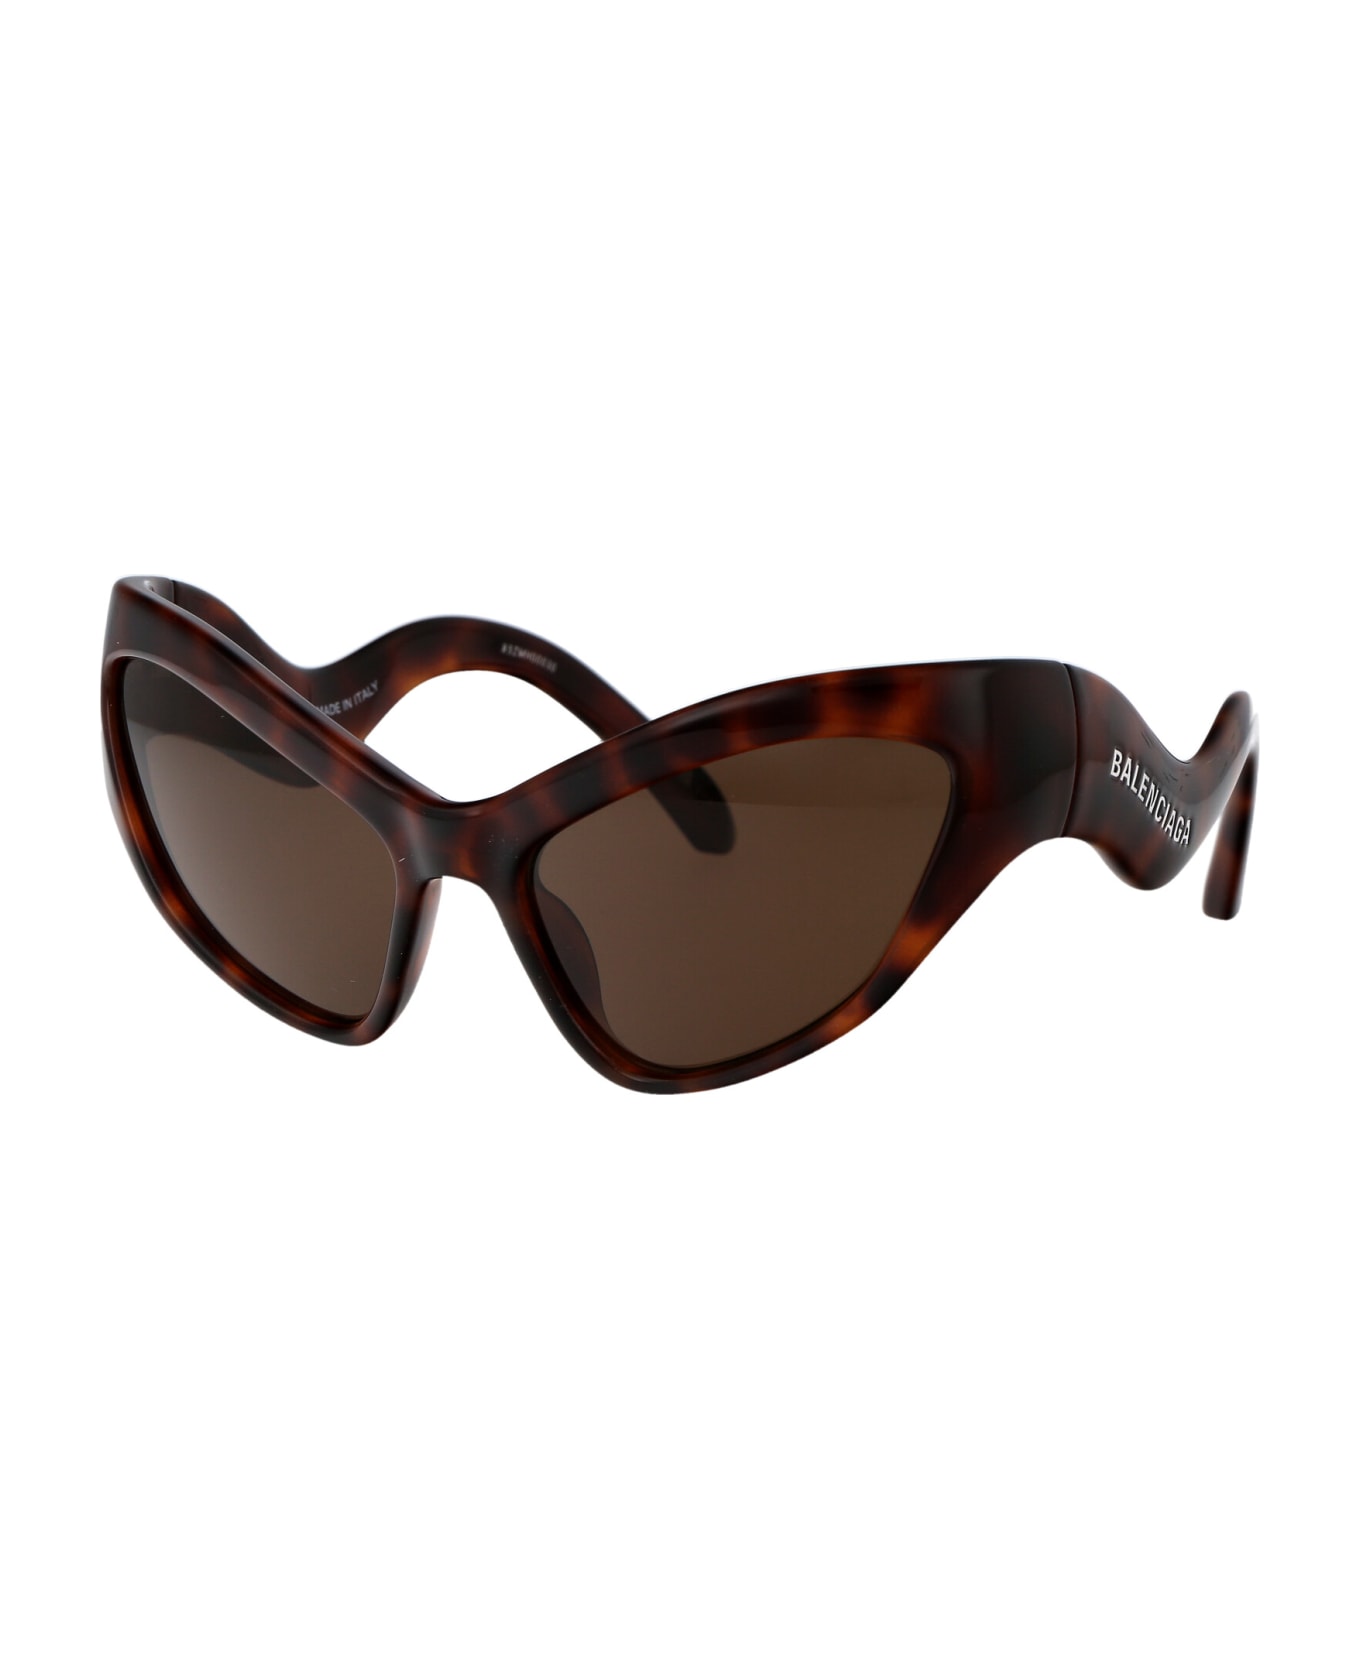 Balenciaga Eyewear Bb0319s Sunglasses - 002 HAVANA HAVANA BROWN